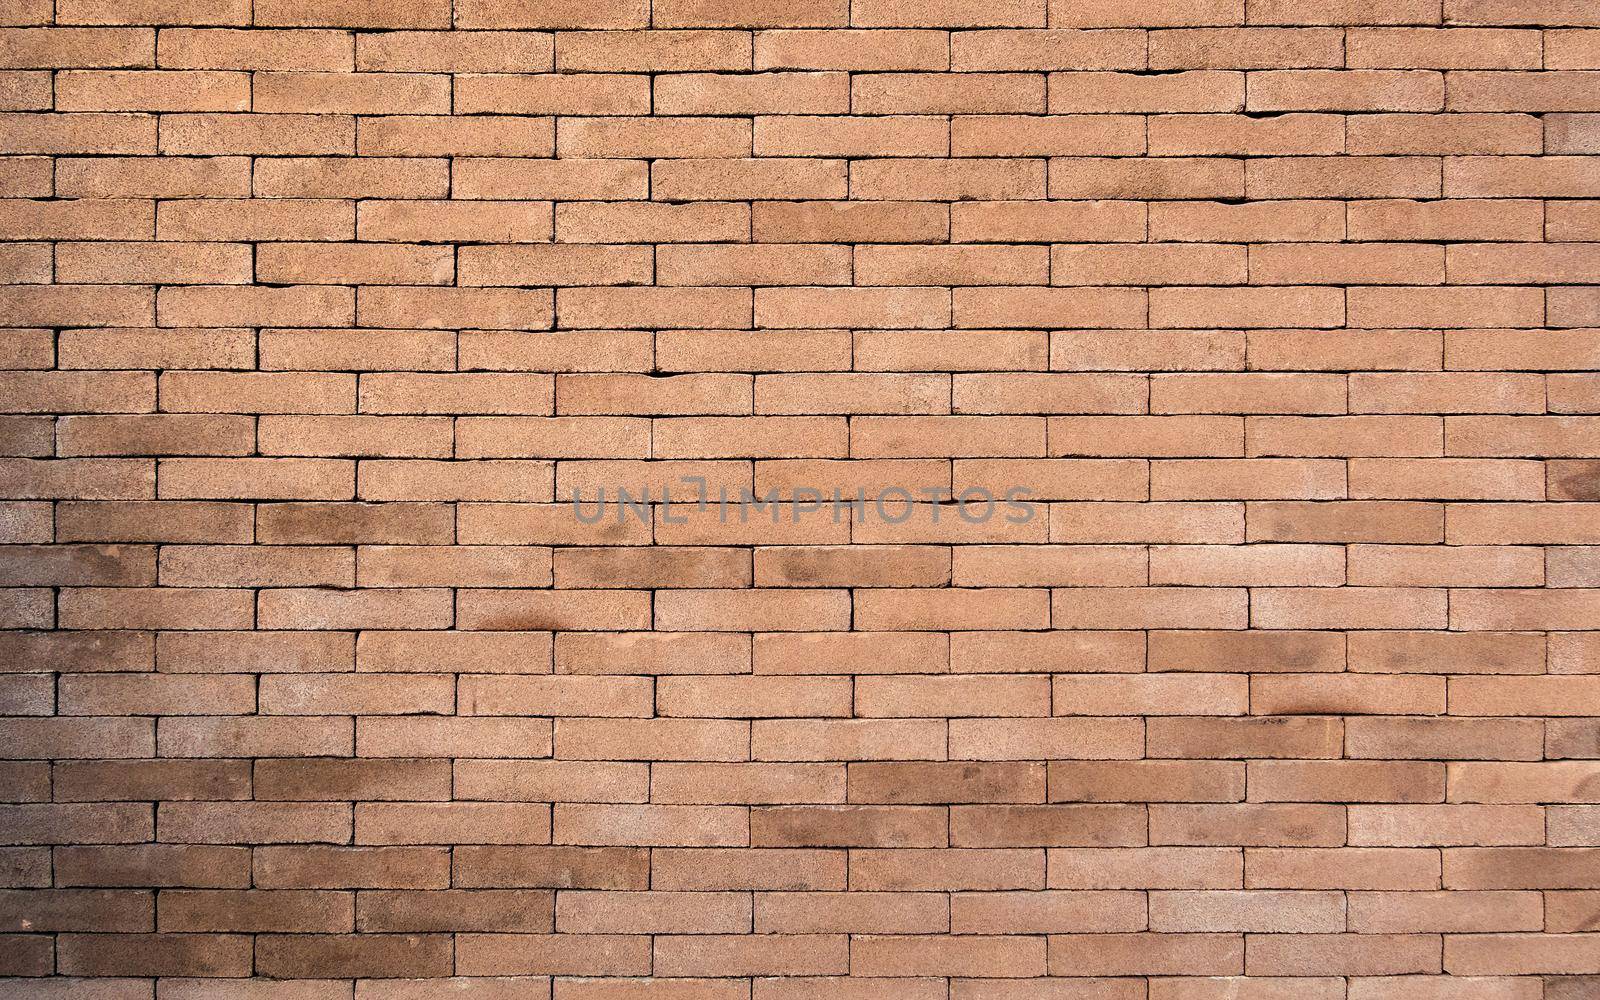 Brick wall background by dutourdumonde